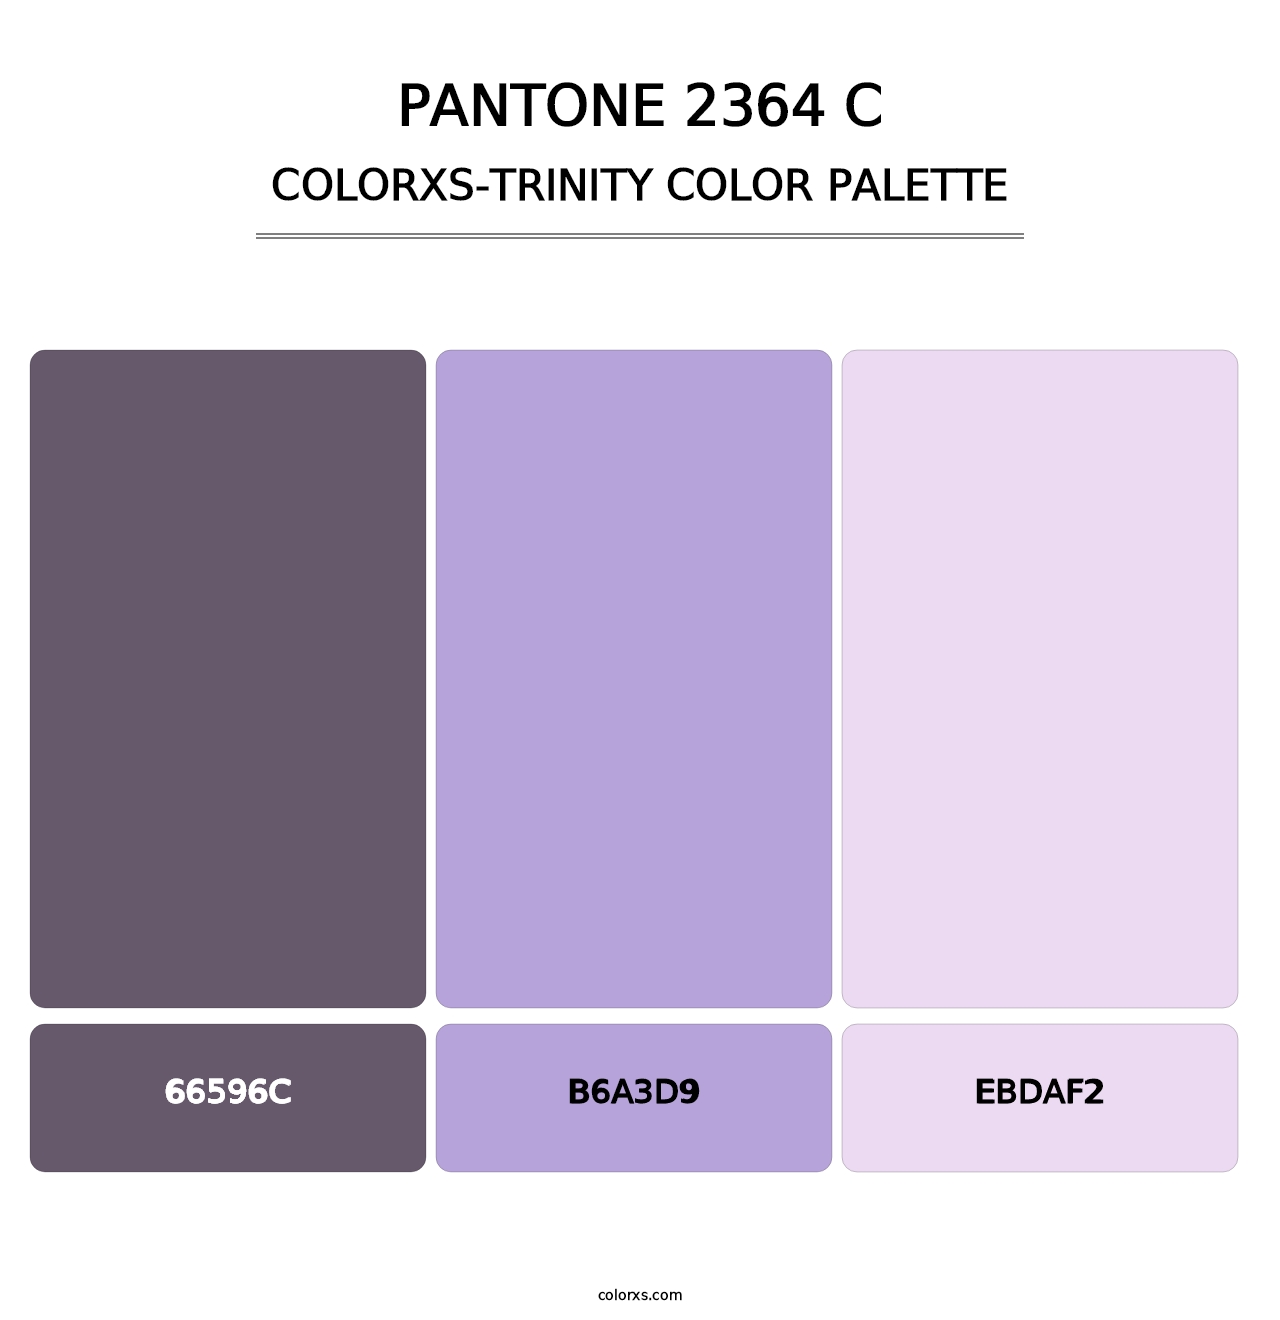 PANTONE 2364 C - Colorxs Trinity Palette